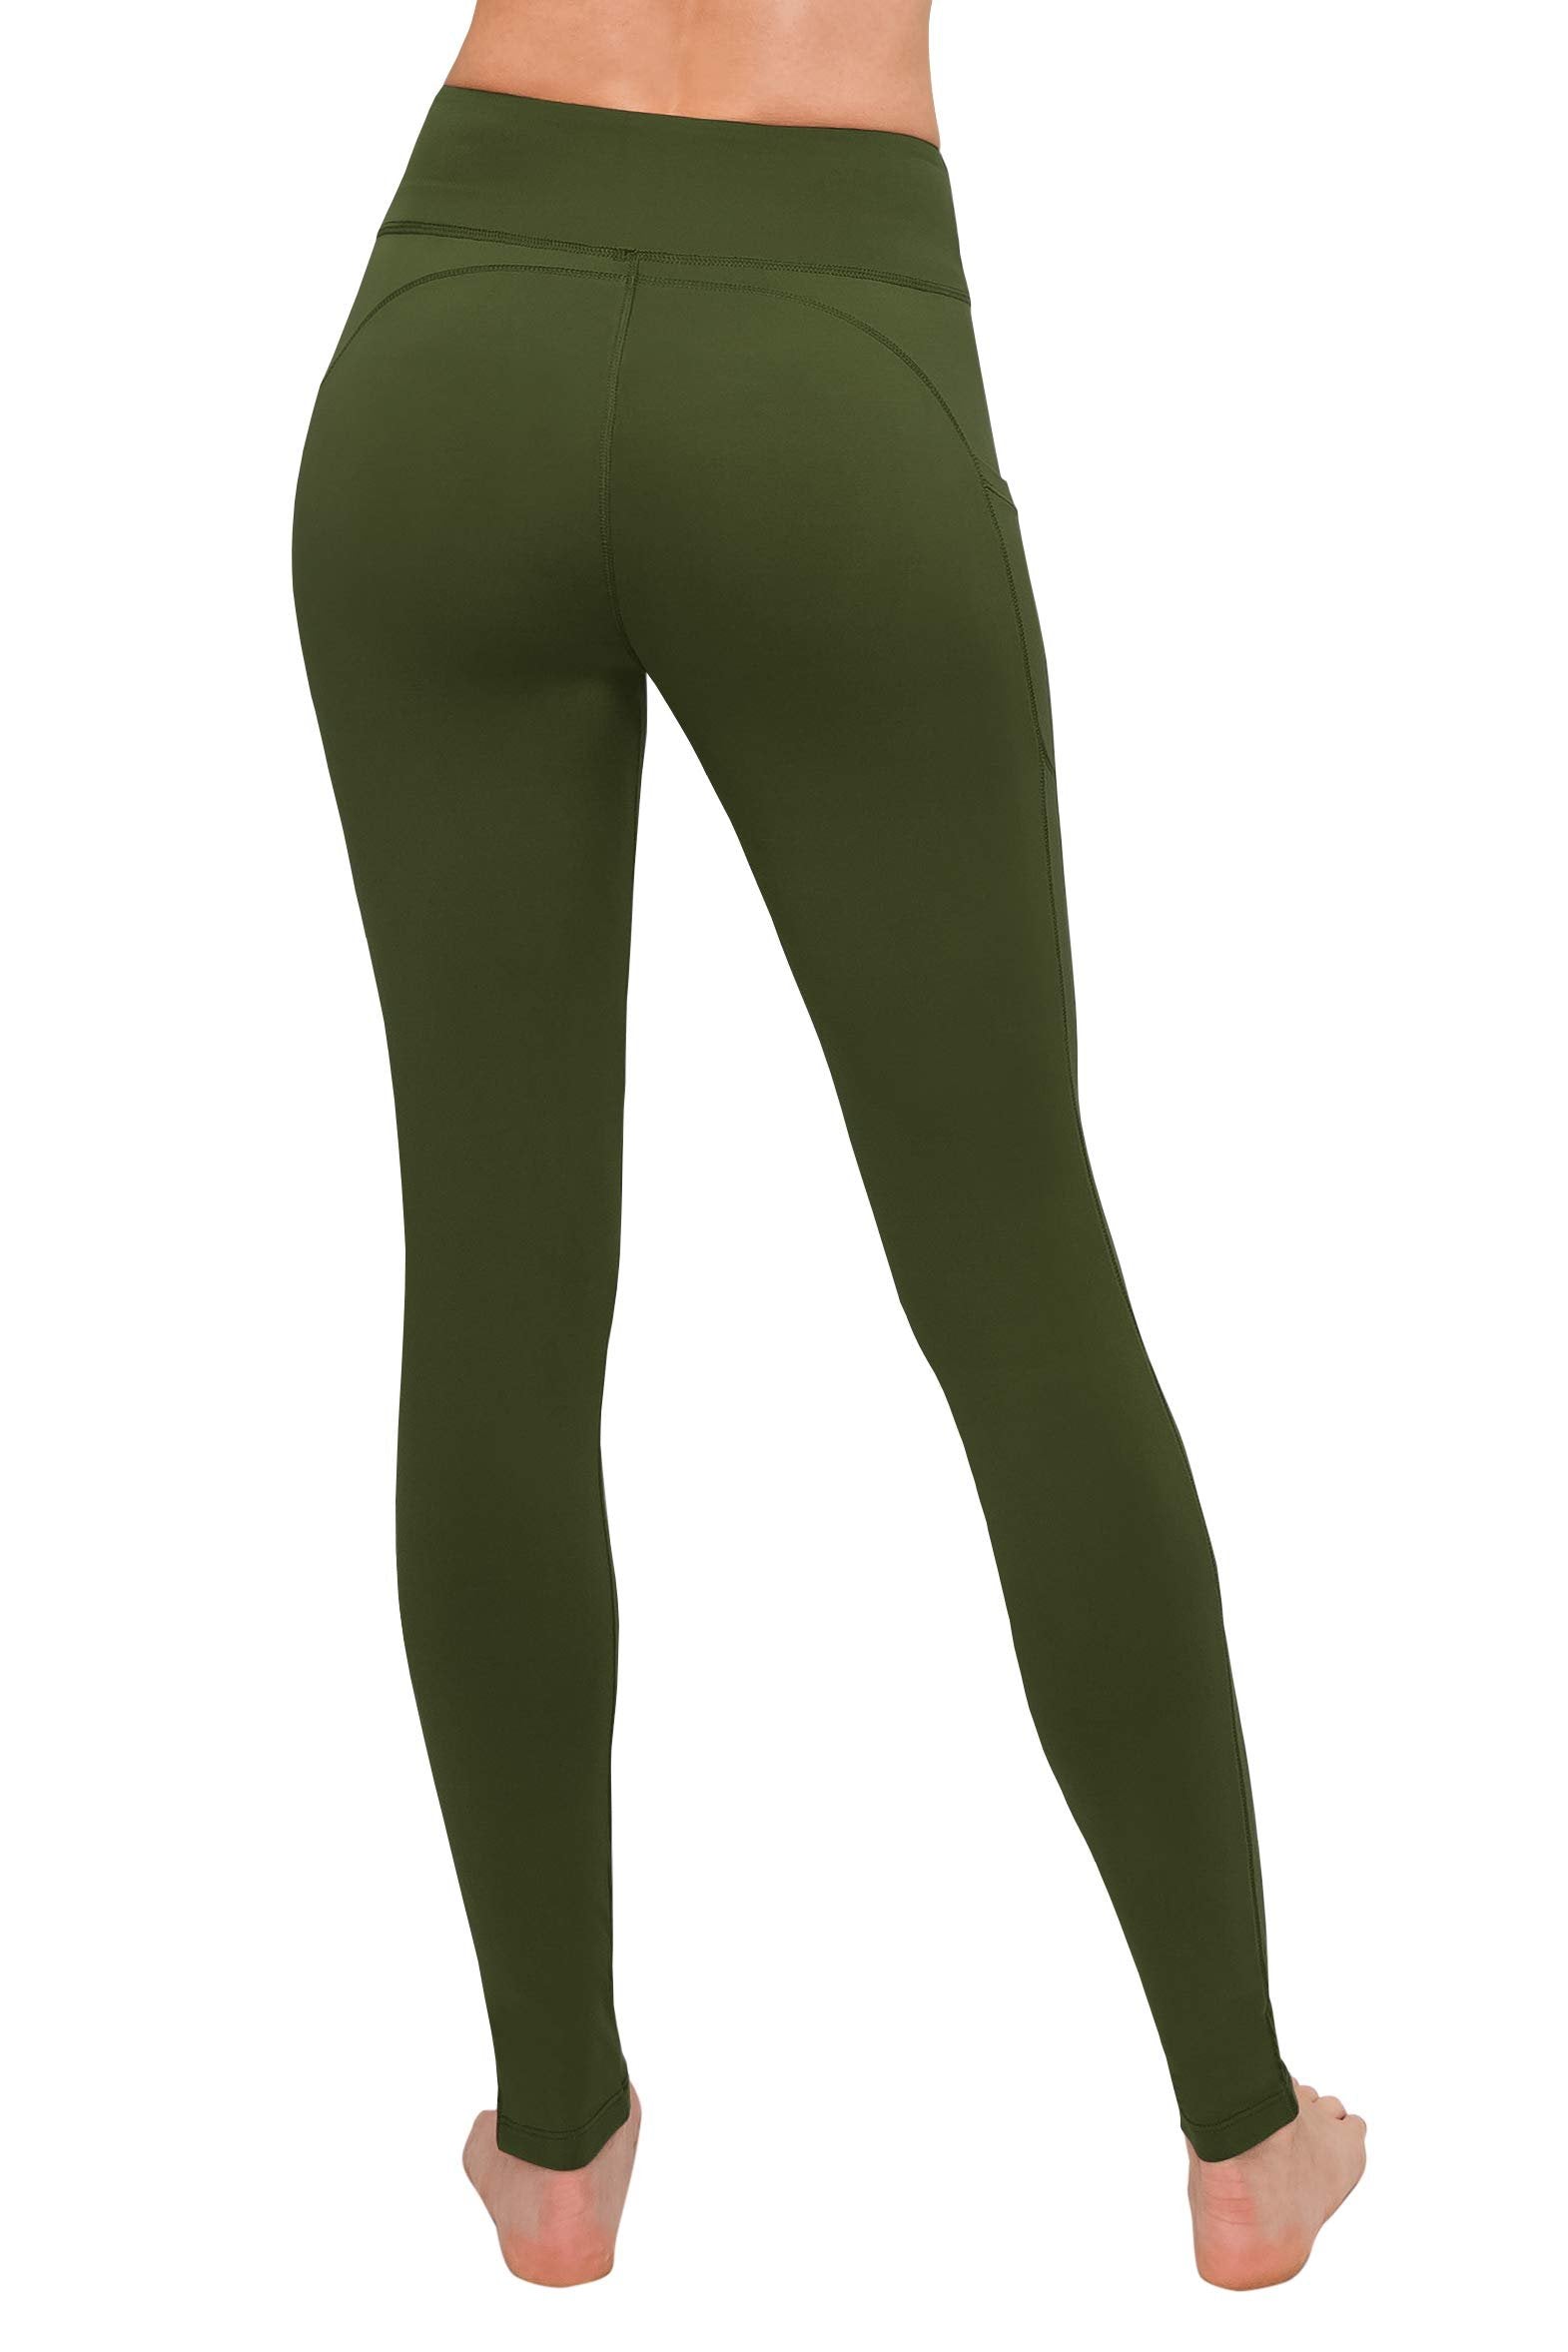 New SATINA Olive High Waisted Leggings w/ Pockets - Women's Yoga Workout Pants - Plus & Regular Sizes - 3 Waistband - Free Shipping & Returns